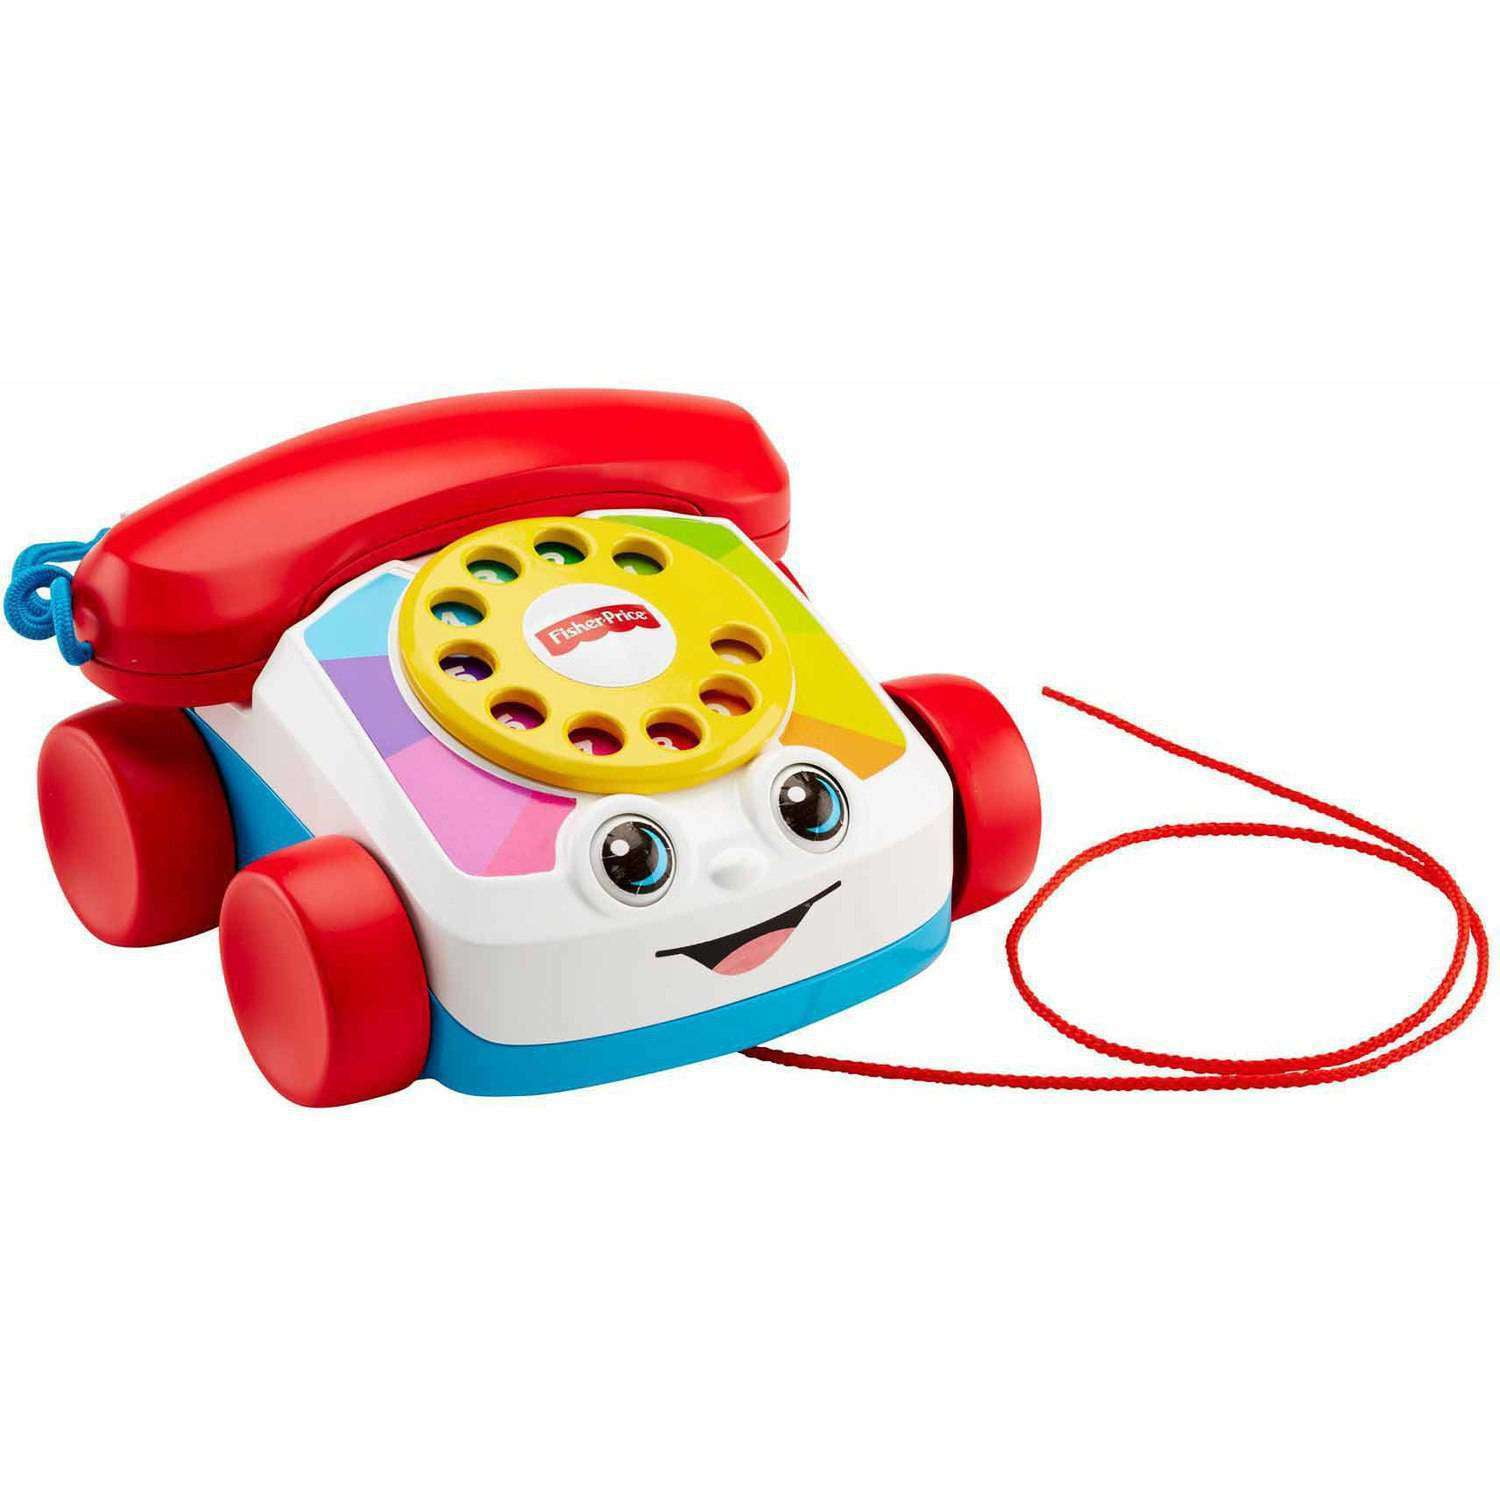 Fisher Price Classic Chatter Telephone Original Retro Toy Phone New 